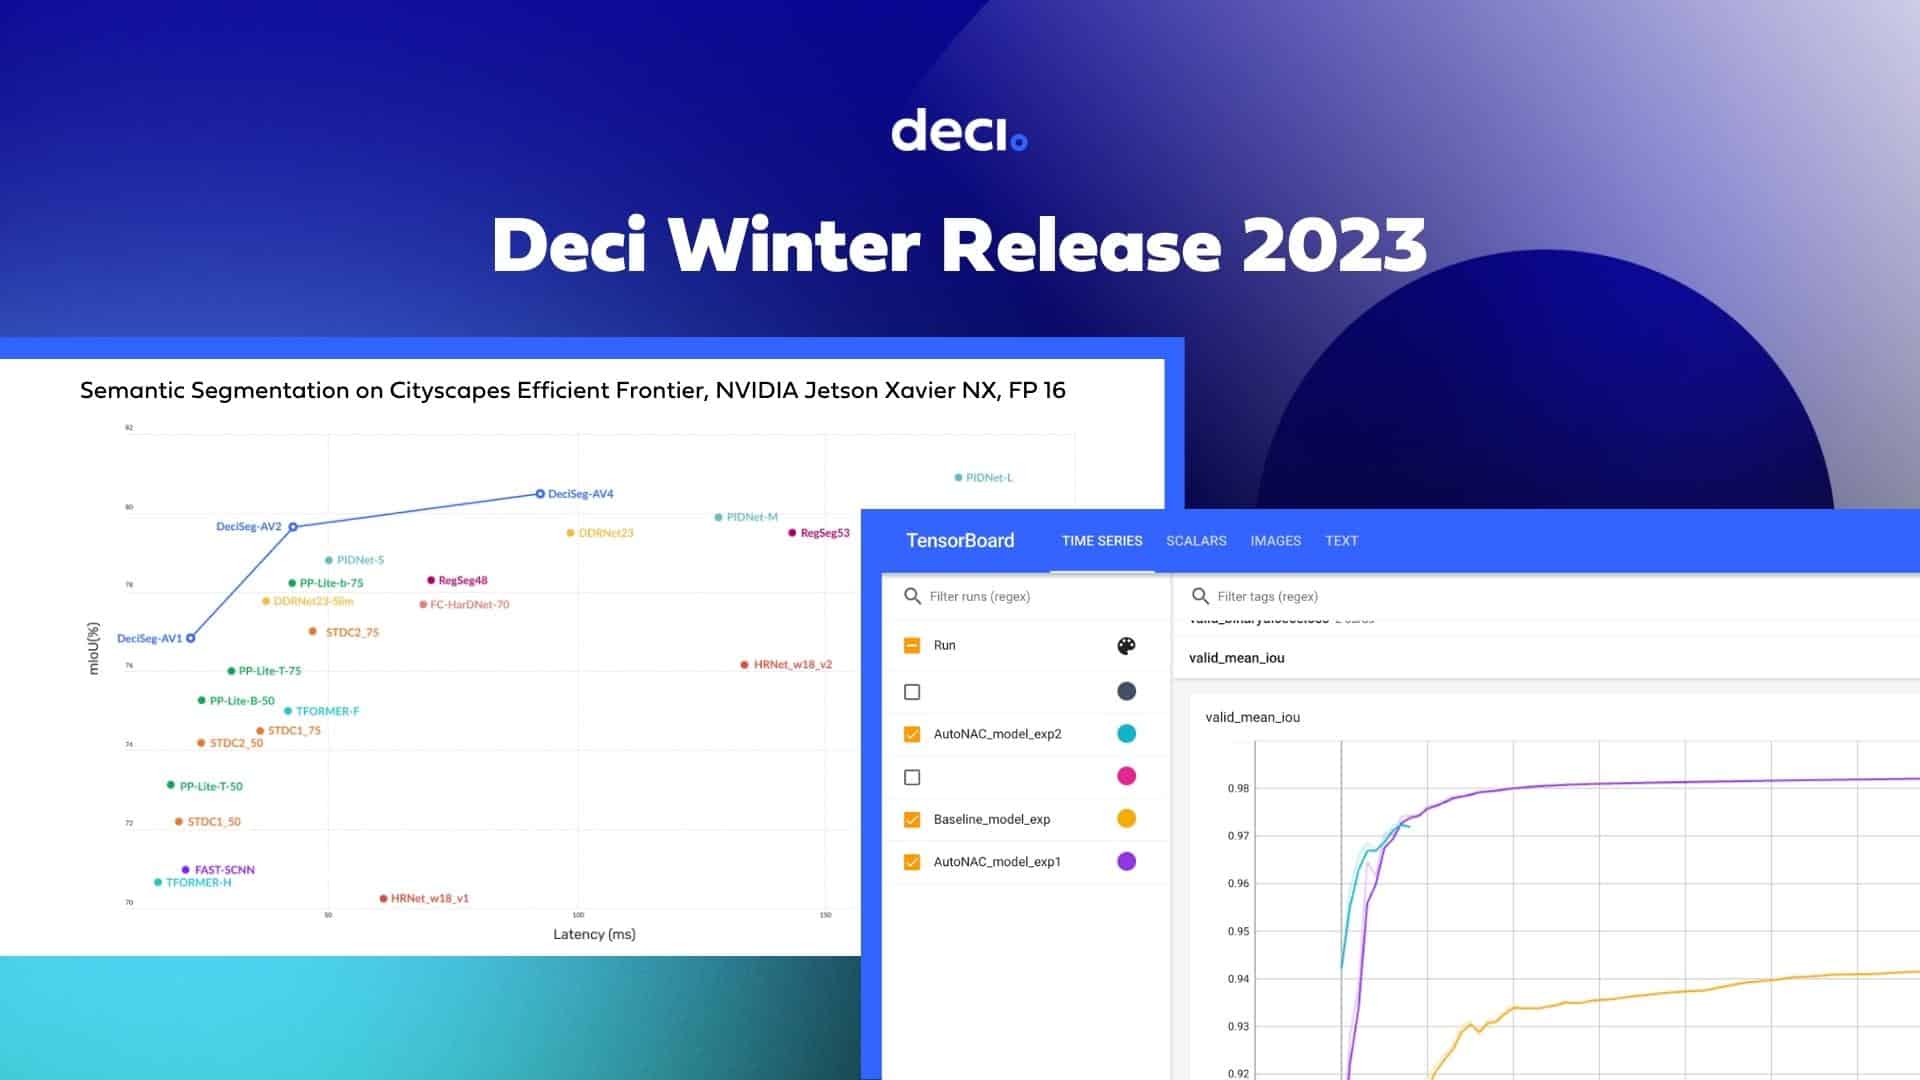 deci-winter-release-2023-blog-featured-5